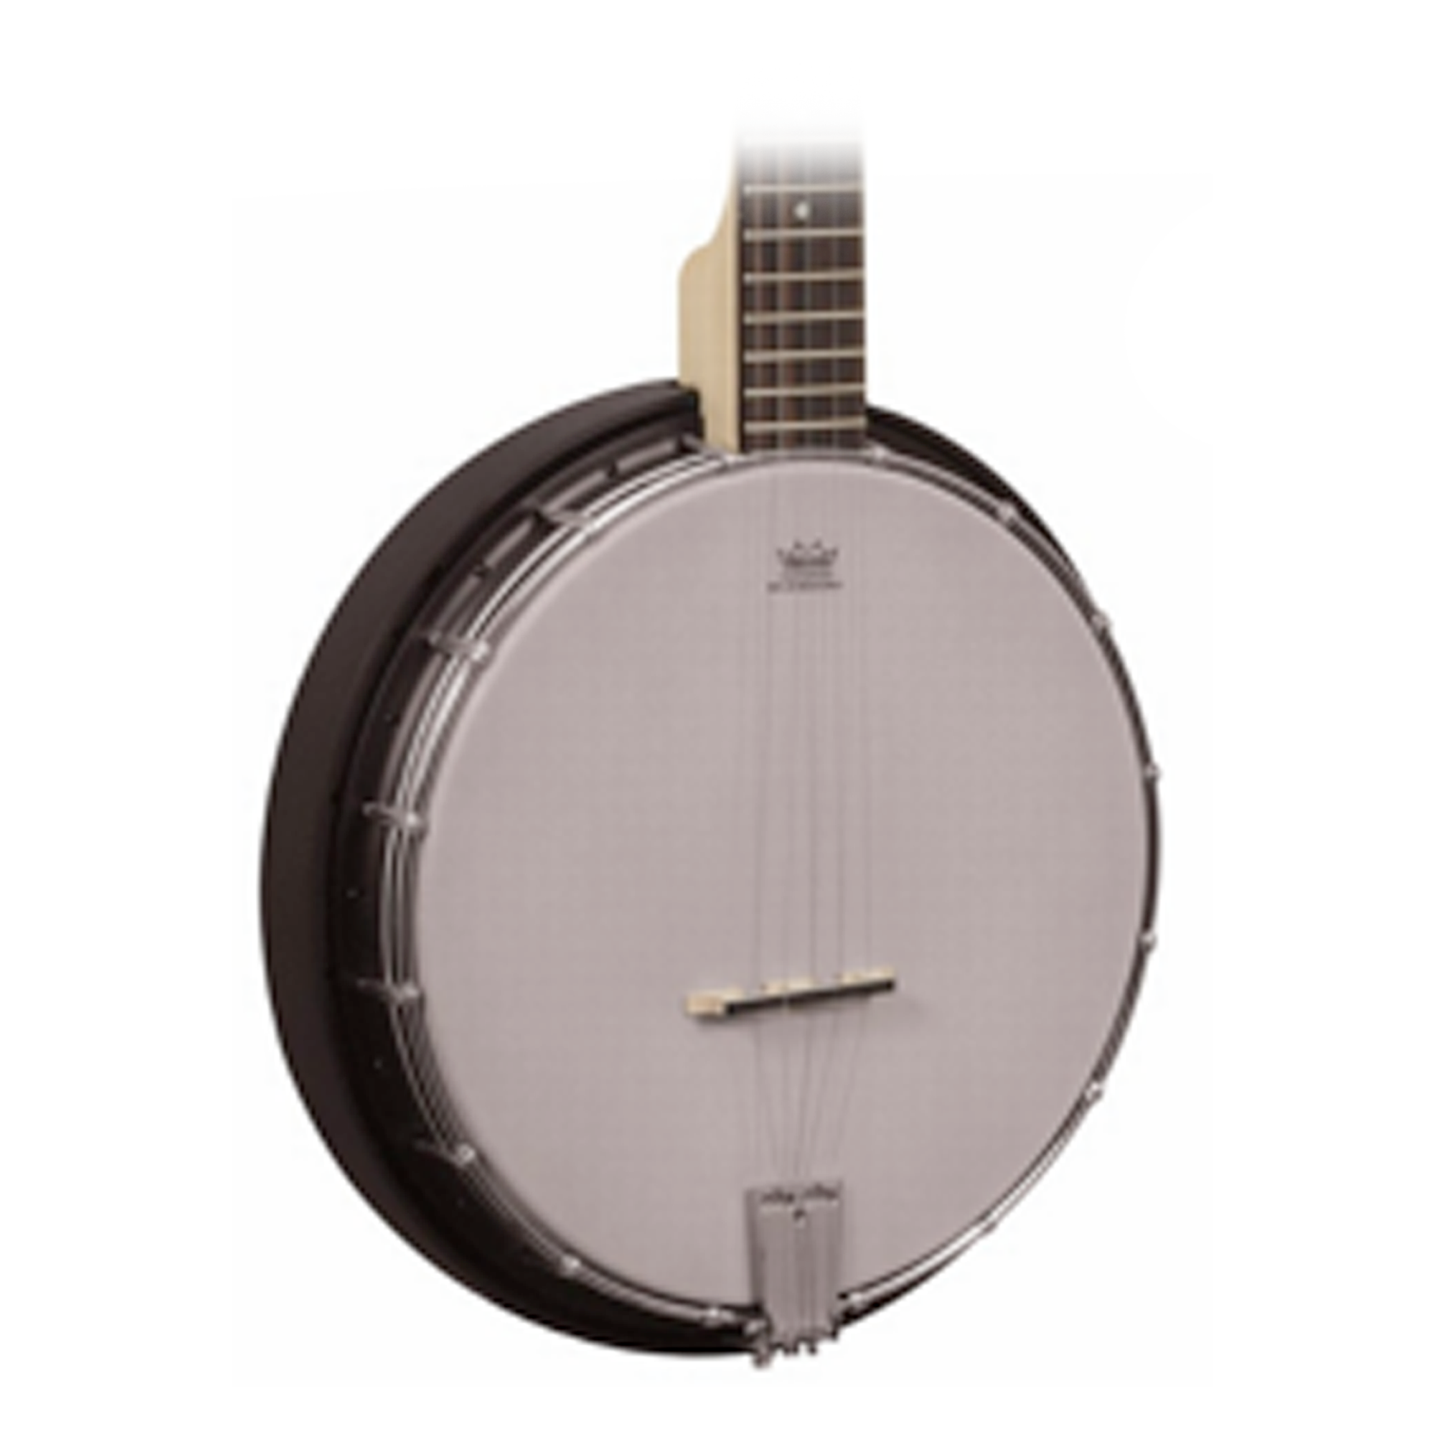 Goldtone AC5 Composite 5 String Banjo